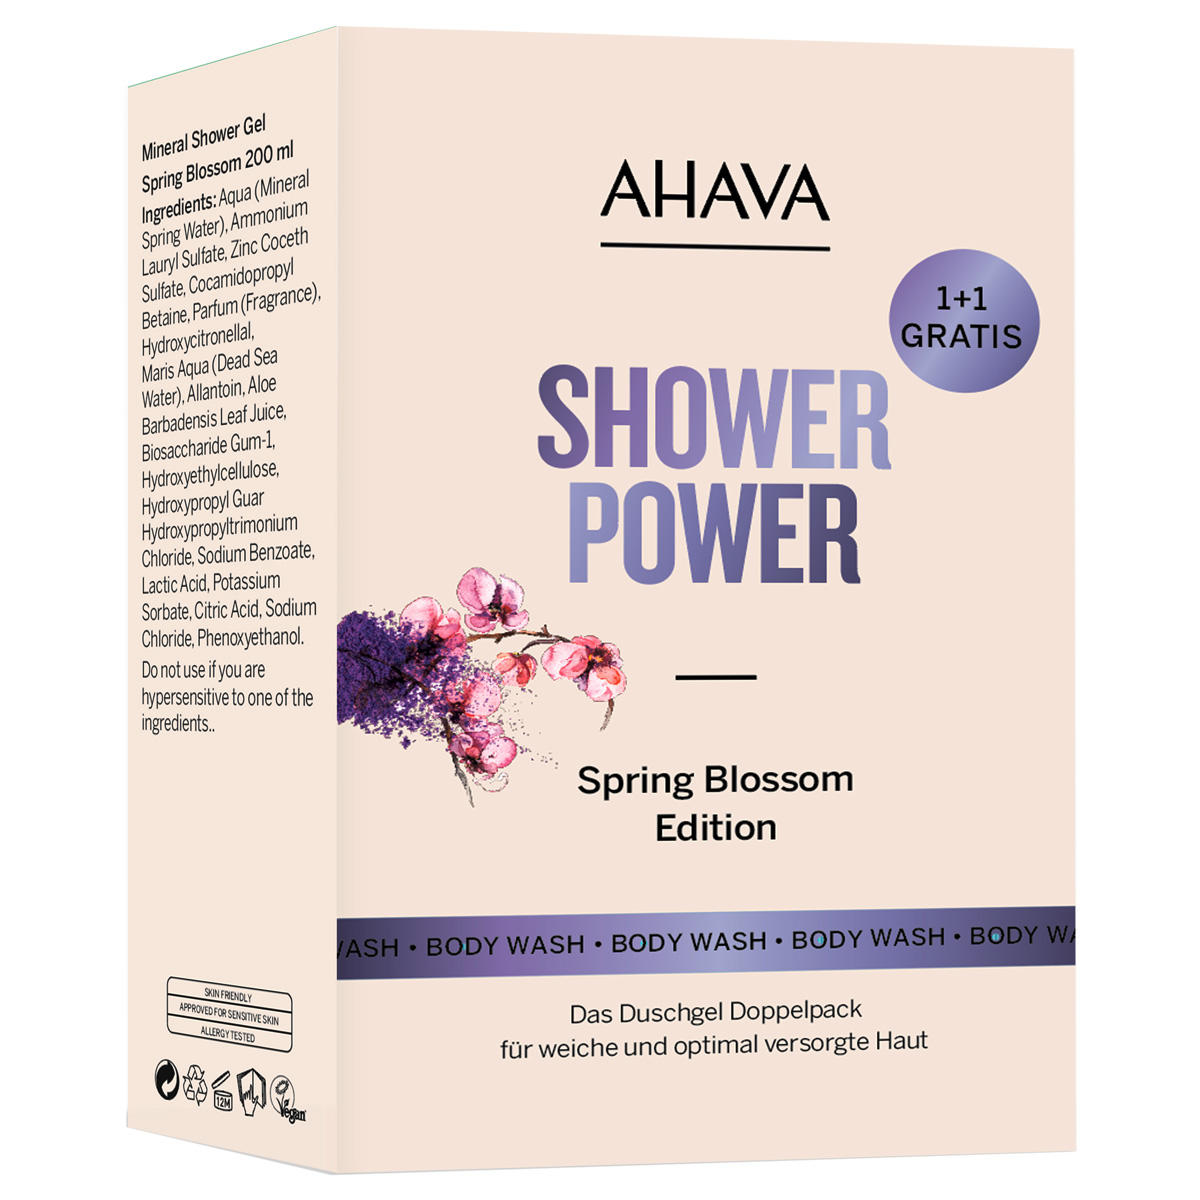 AHAVA Shower Power Spring Blossom Edition Duo Kit 2 x 200 ml - 1